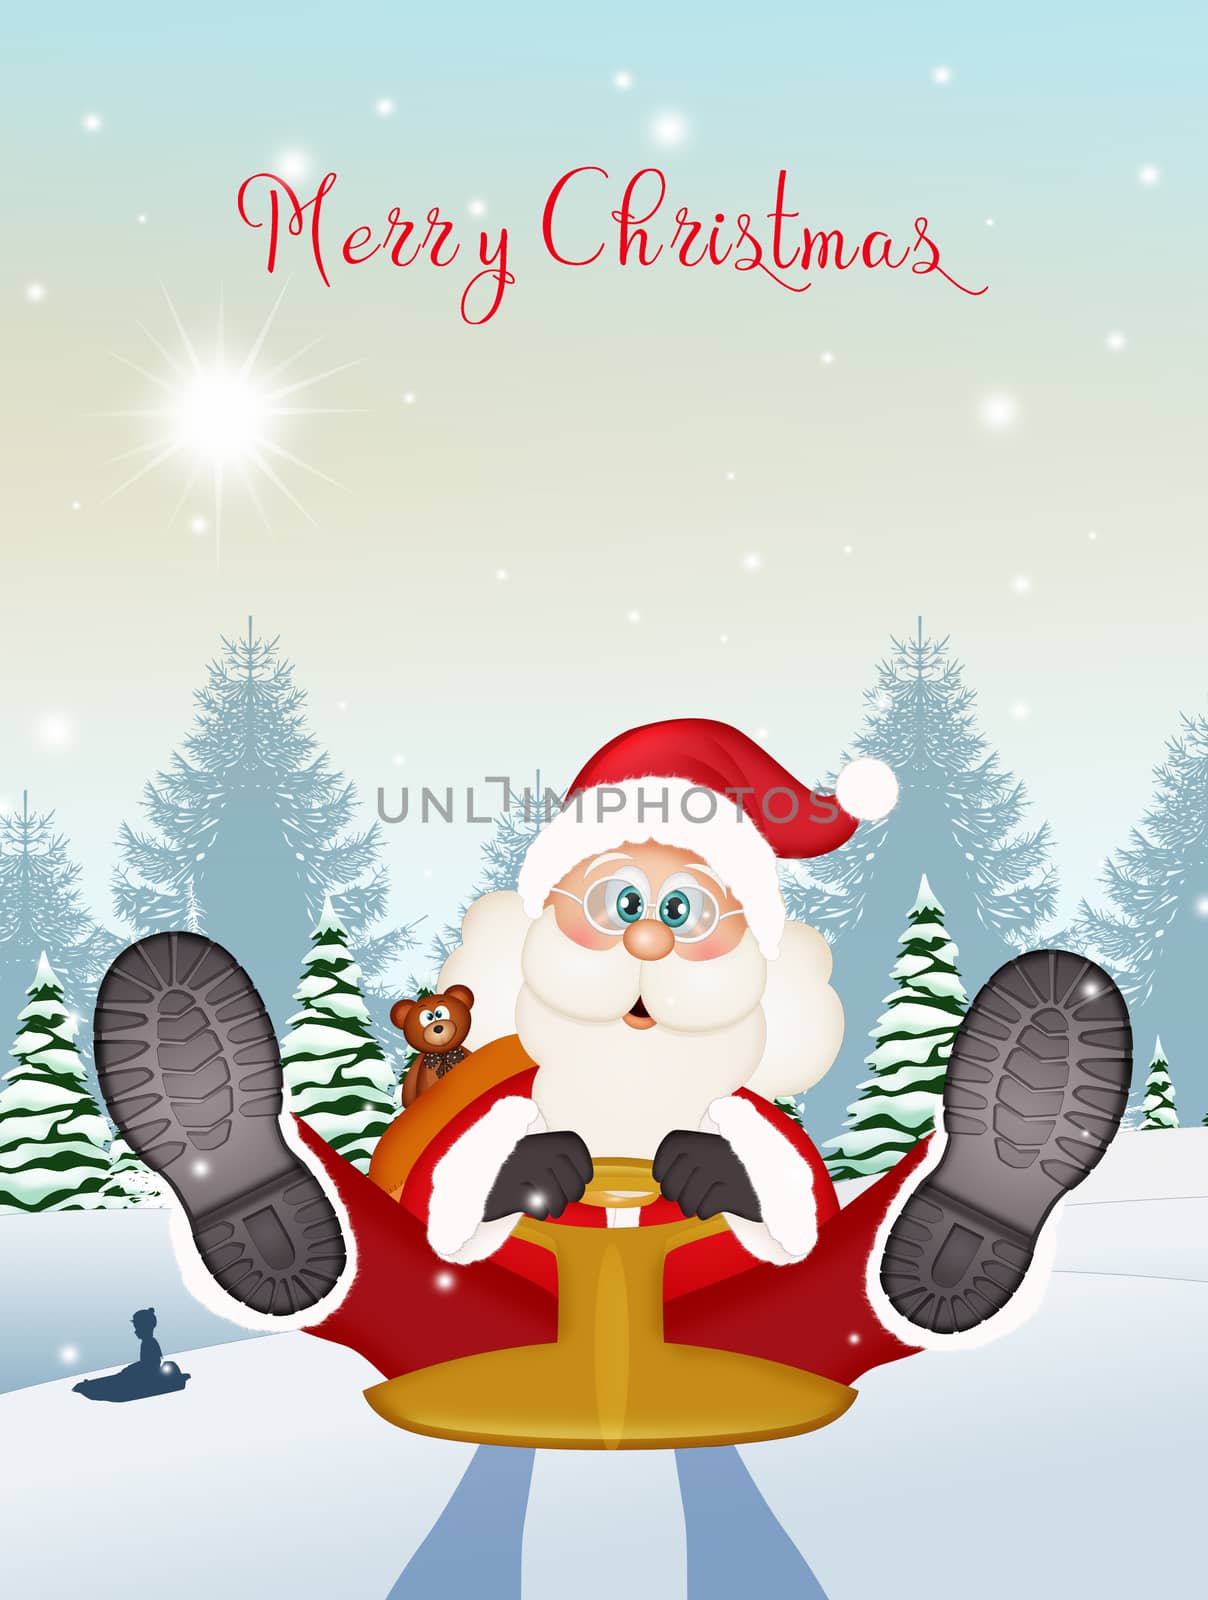 illustration of Santa Claus on sleigh